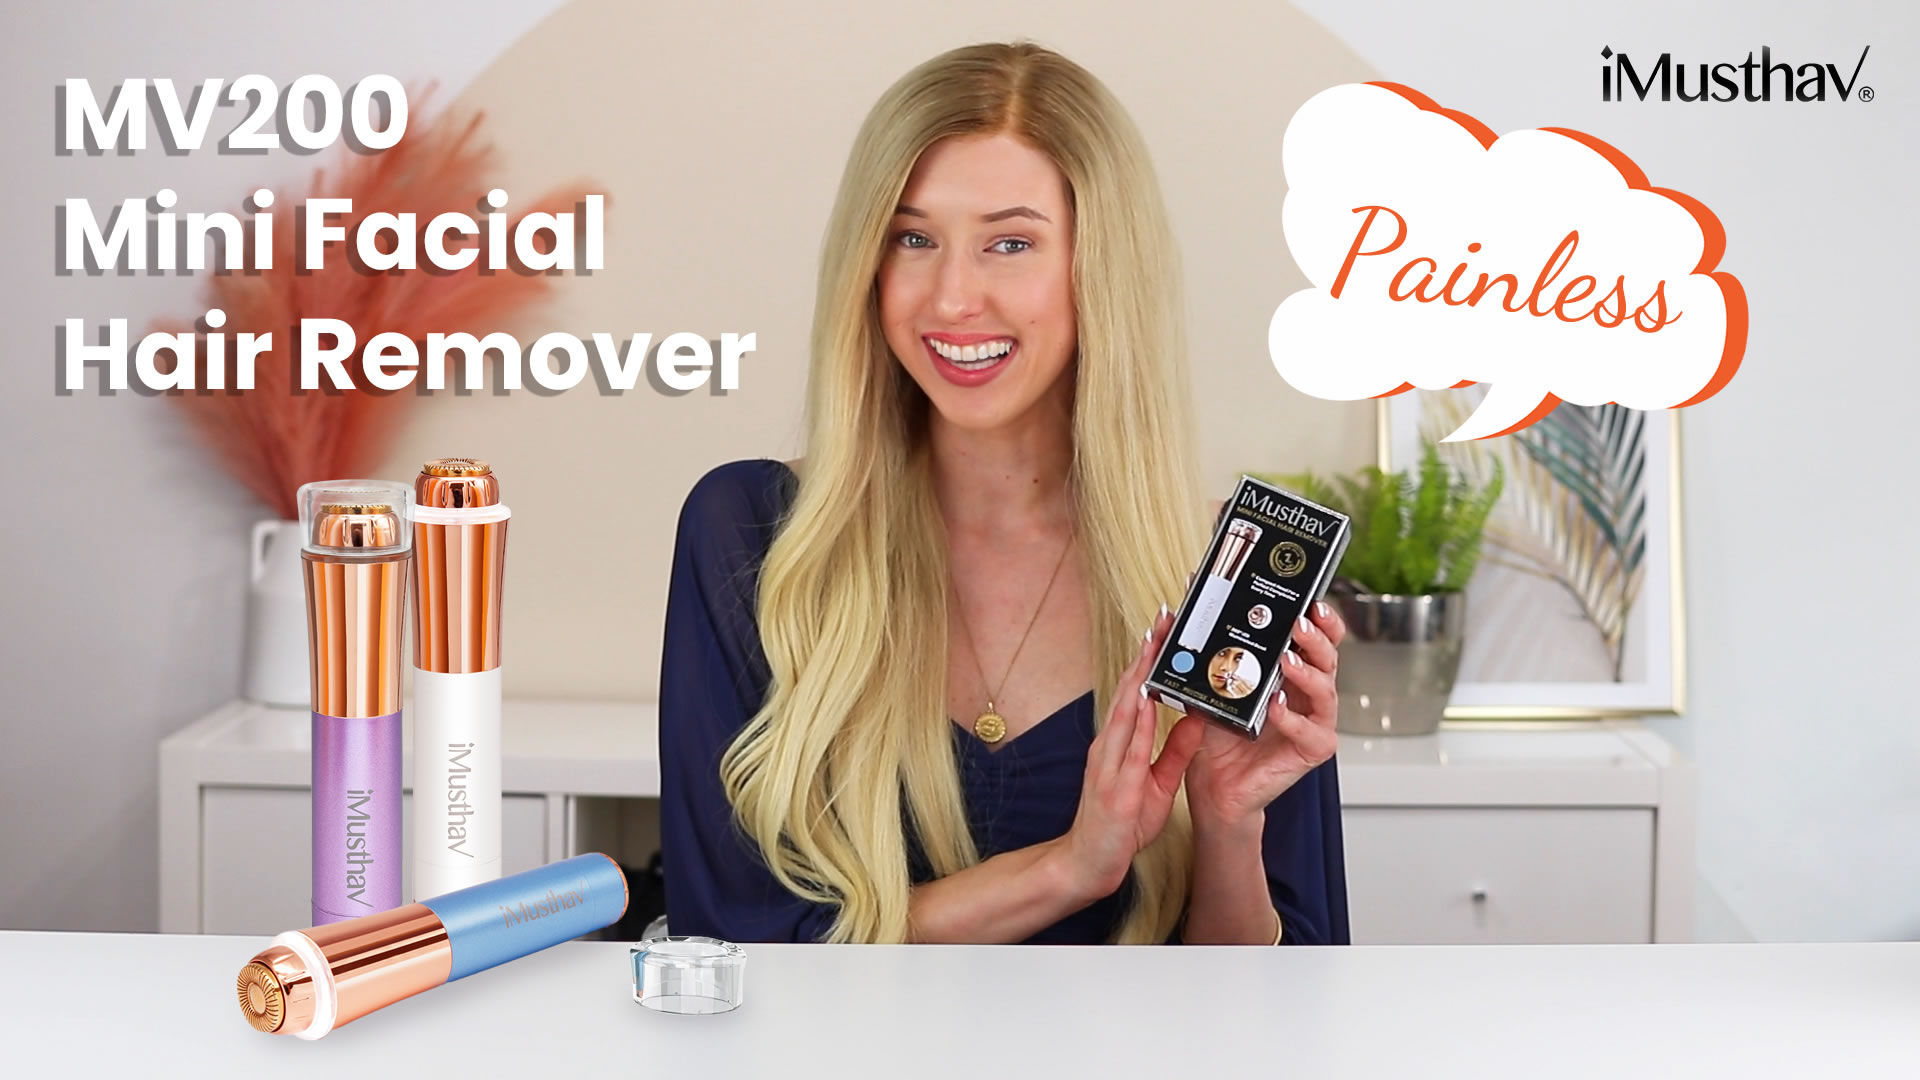 iMusthav® Mini Facial Hair Remover MV200 | REVIEW & DEMO | Janna Niki